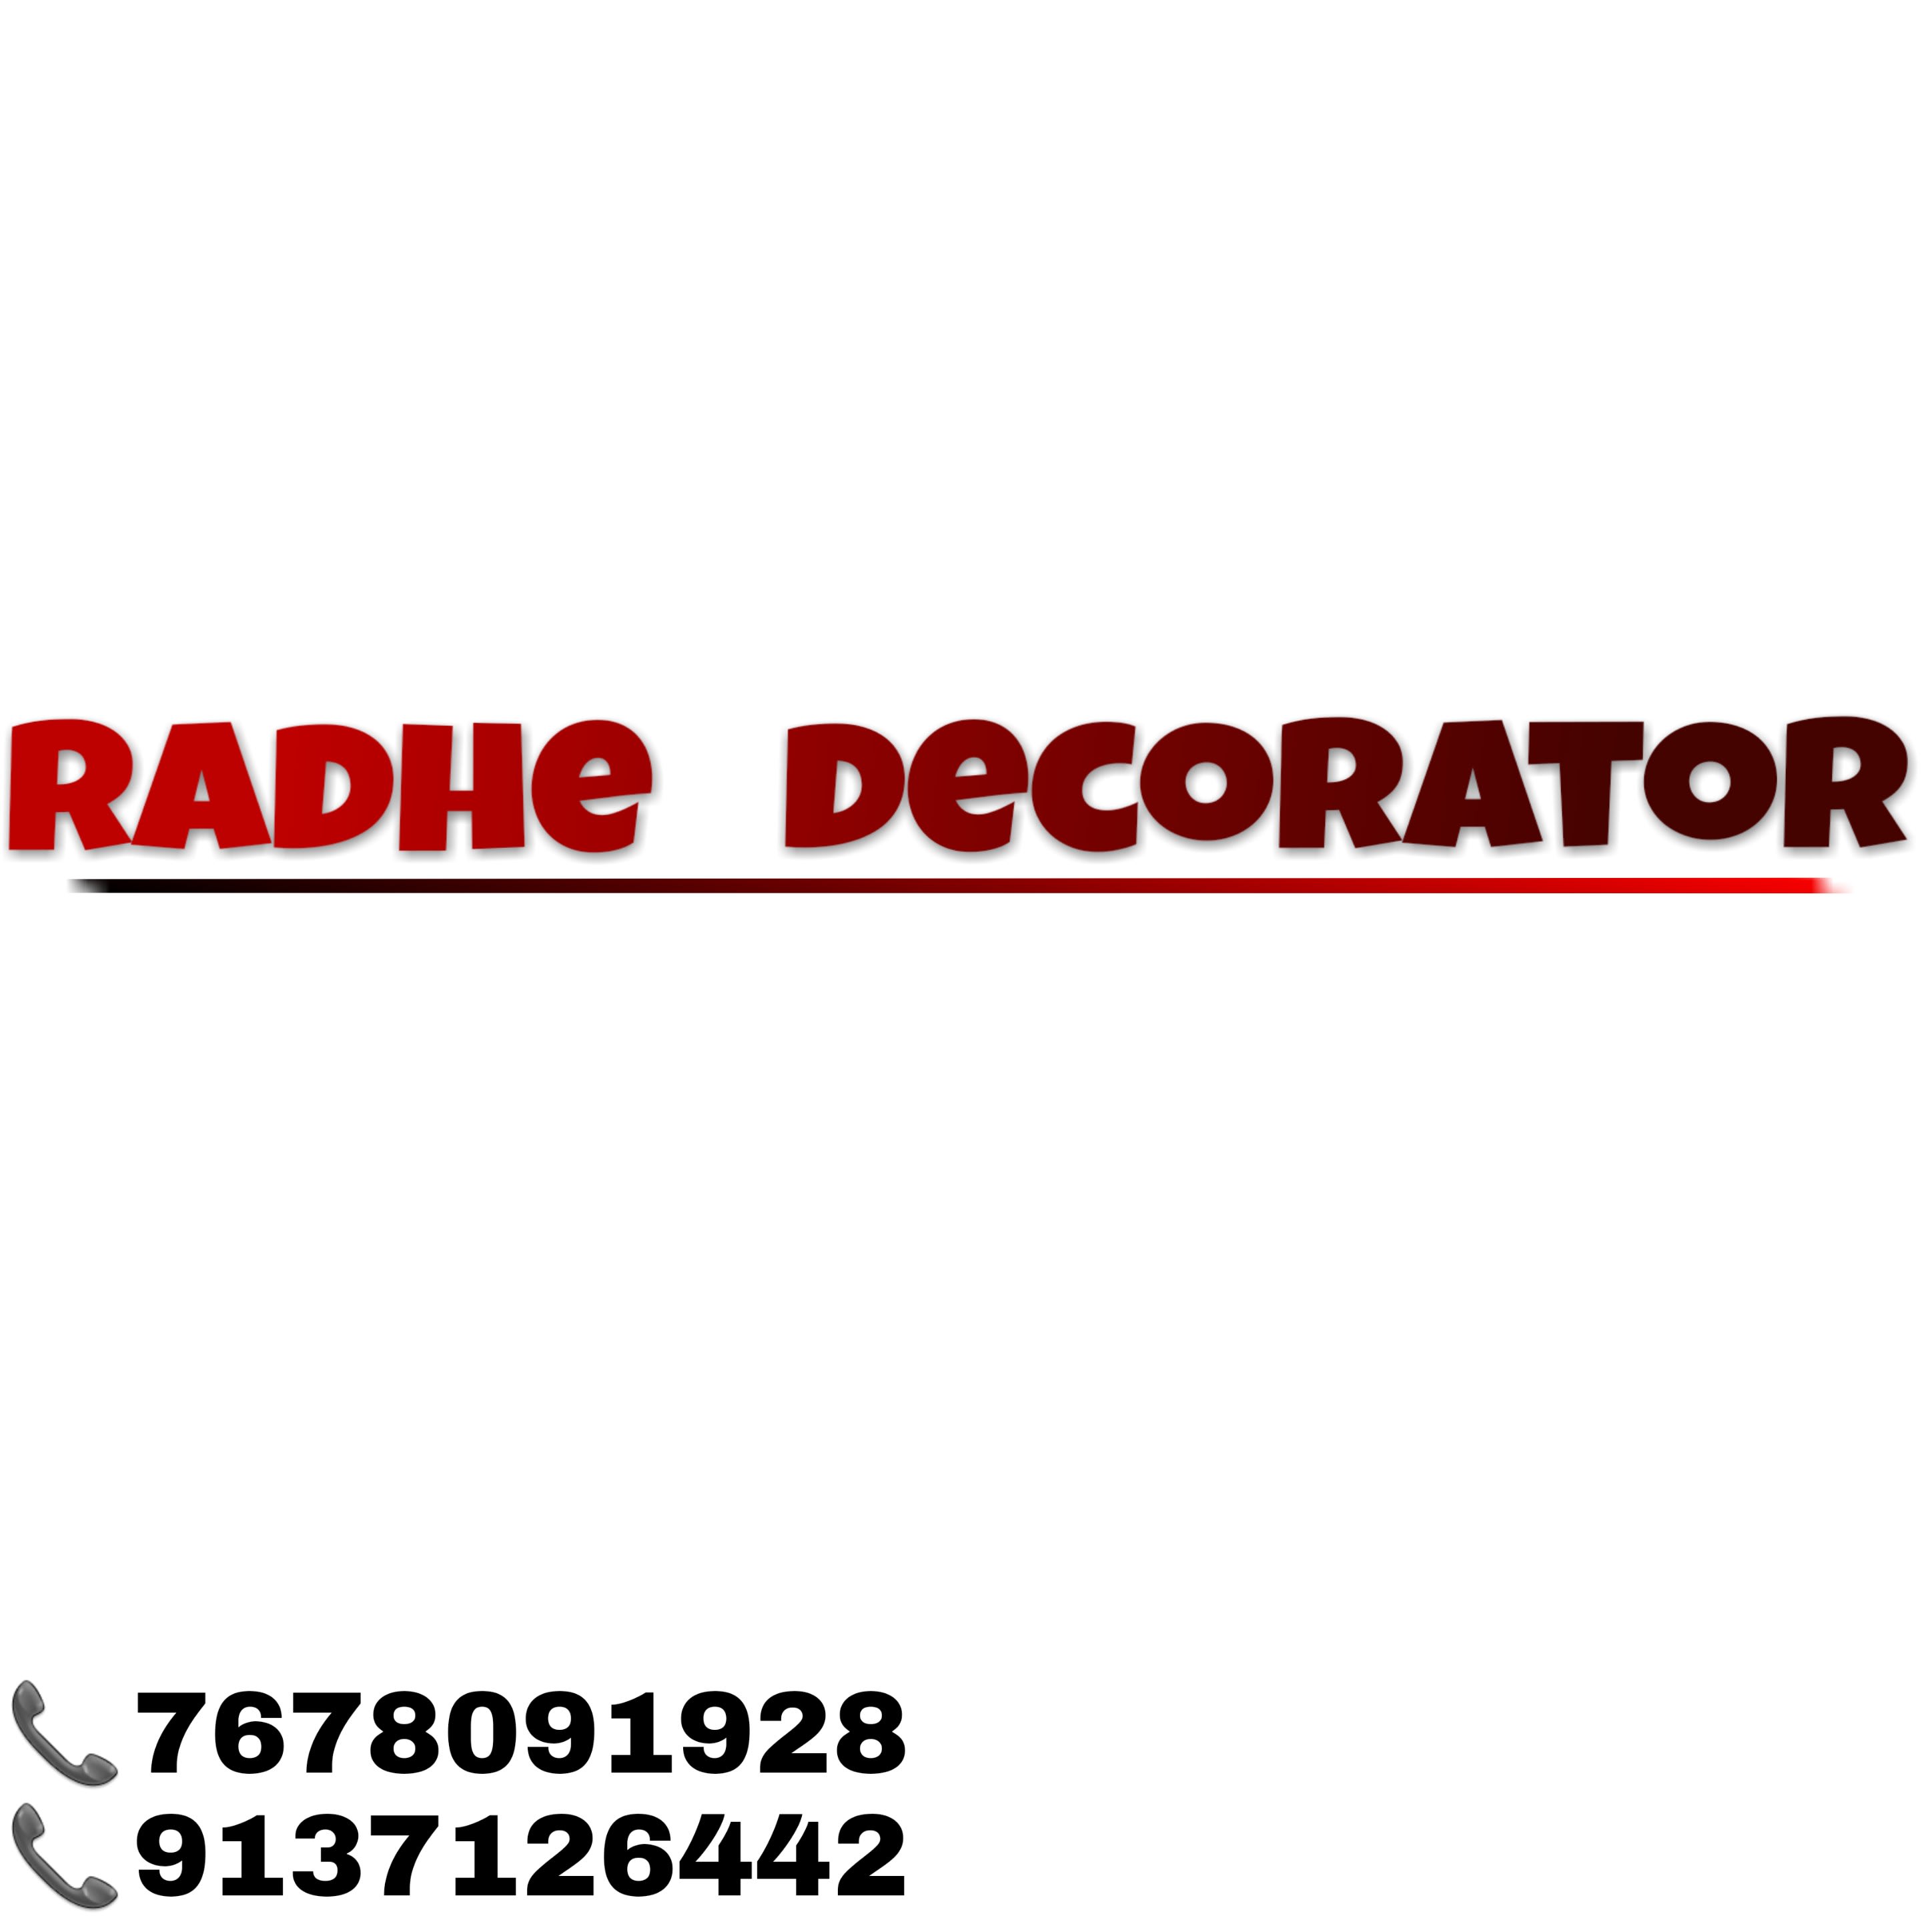 Radhe Decorators